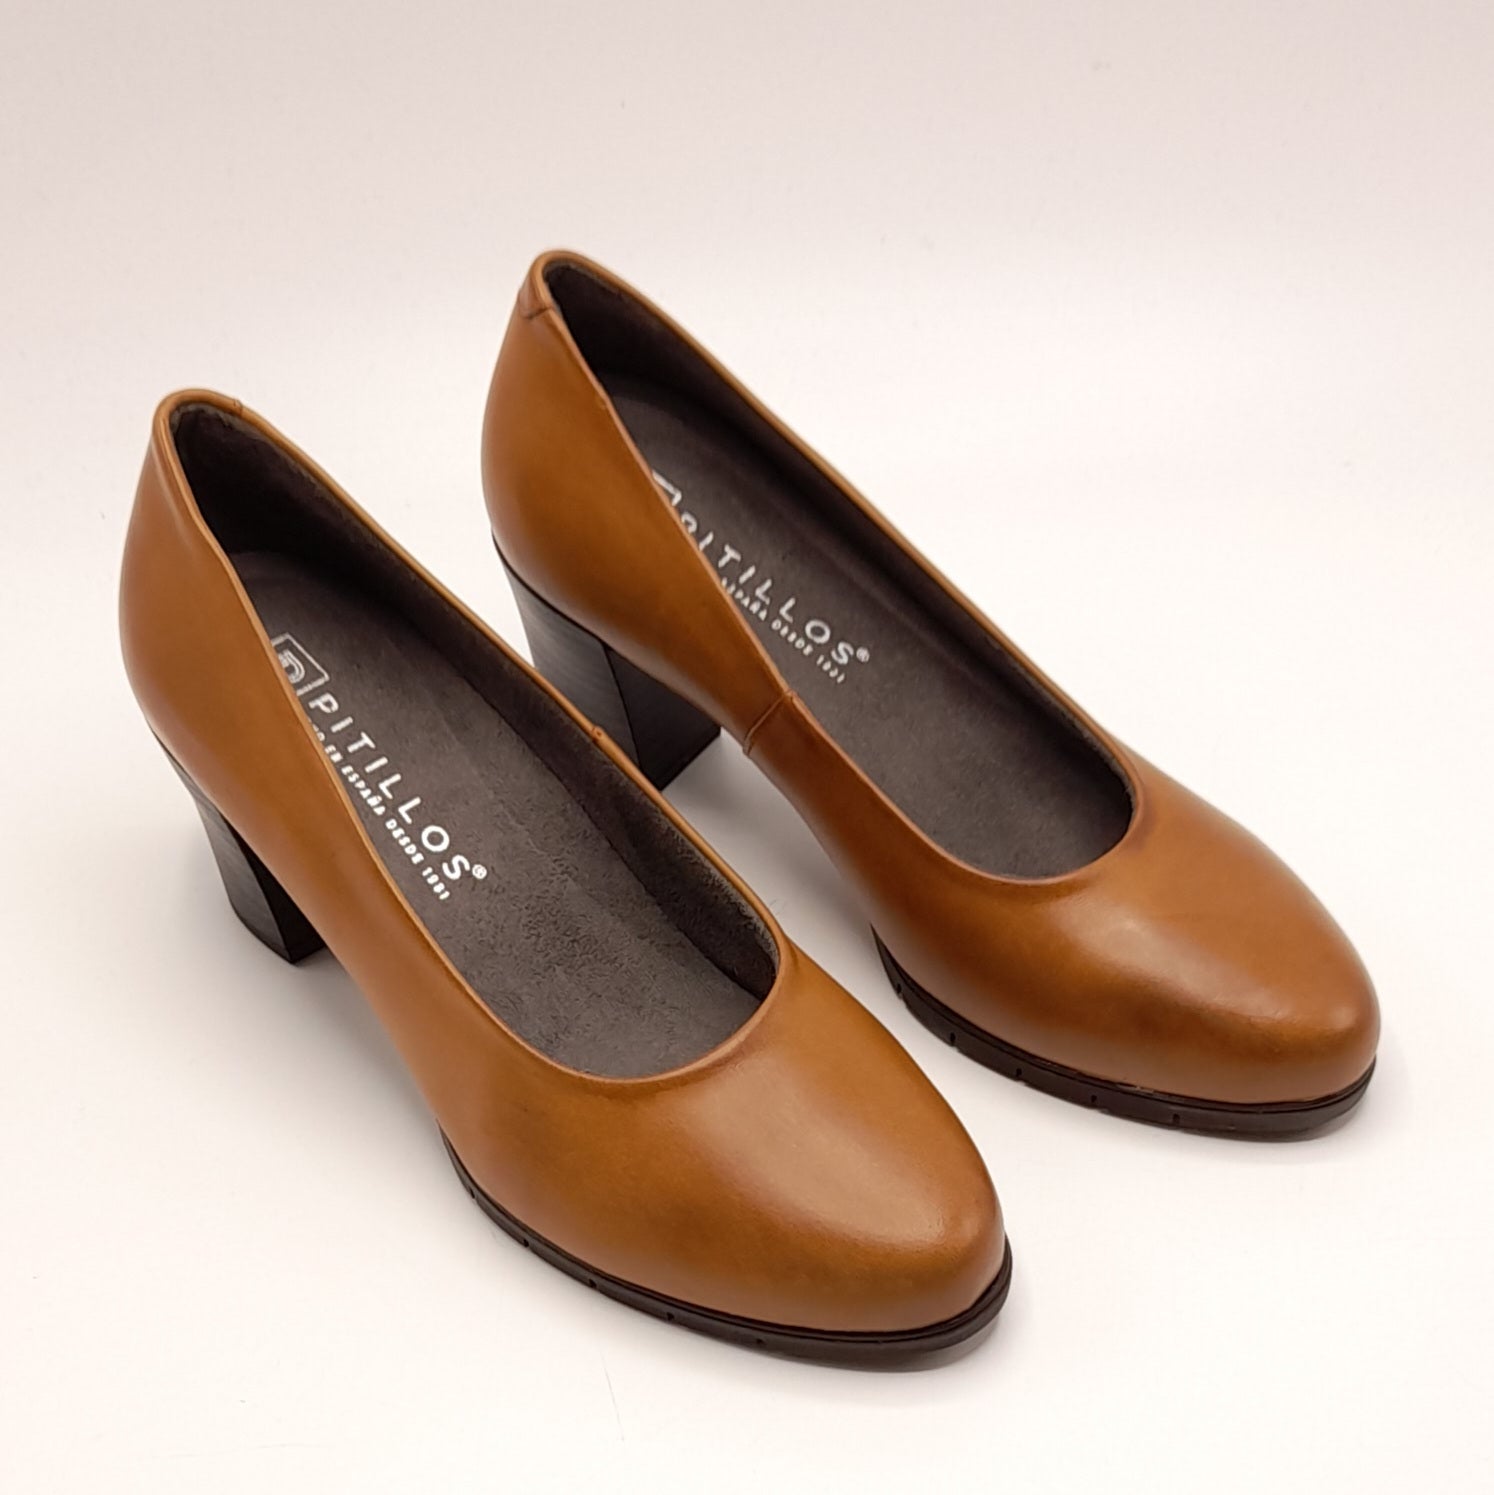 Zapatos PITILLOS 1770-100